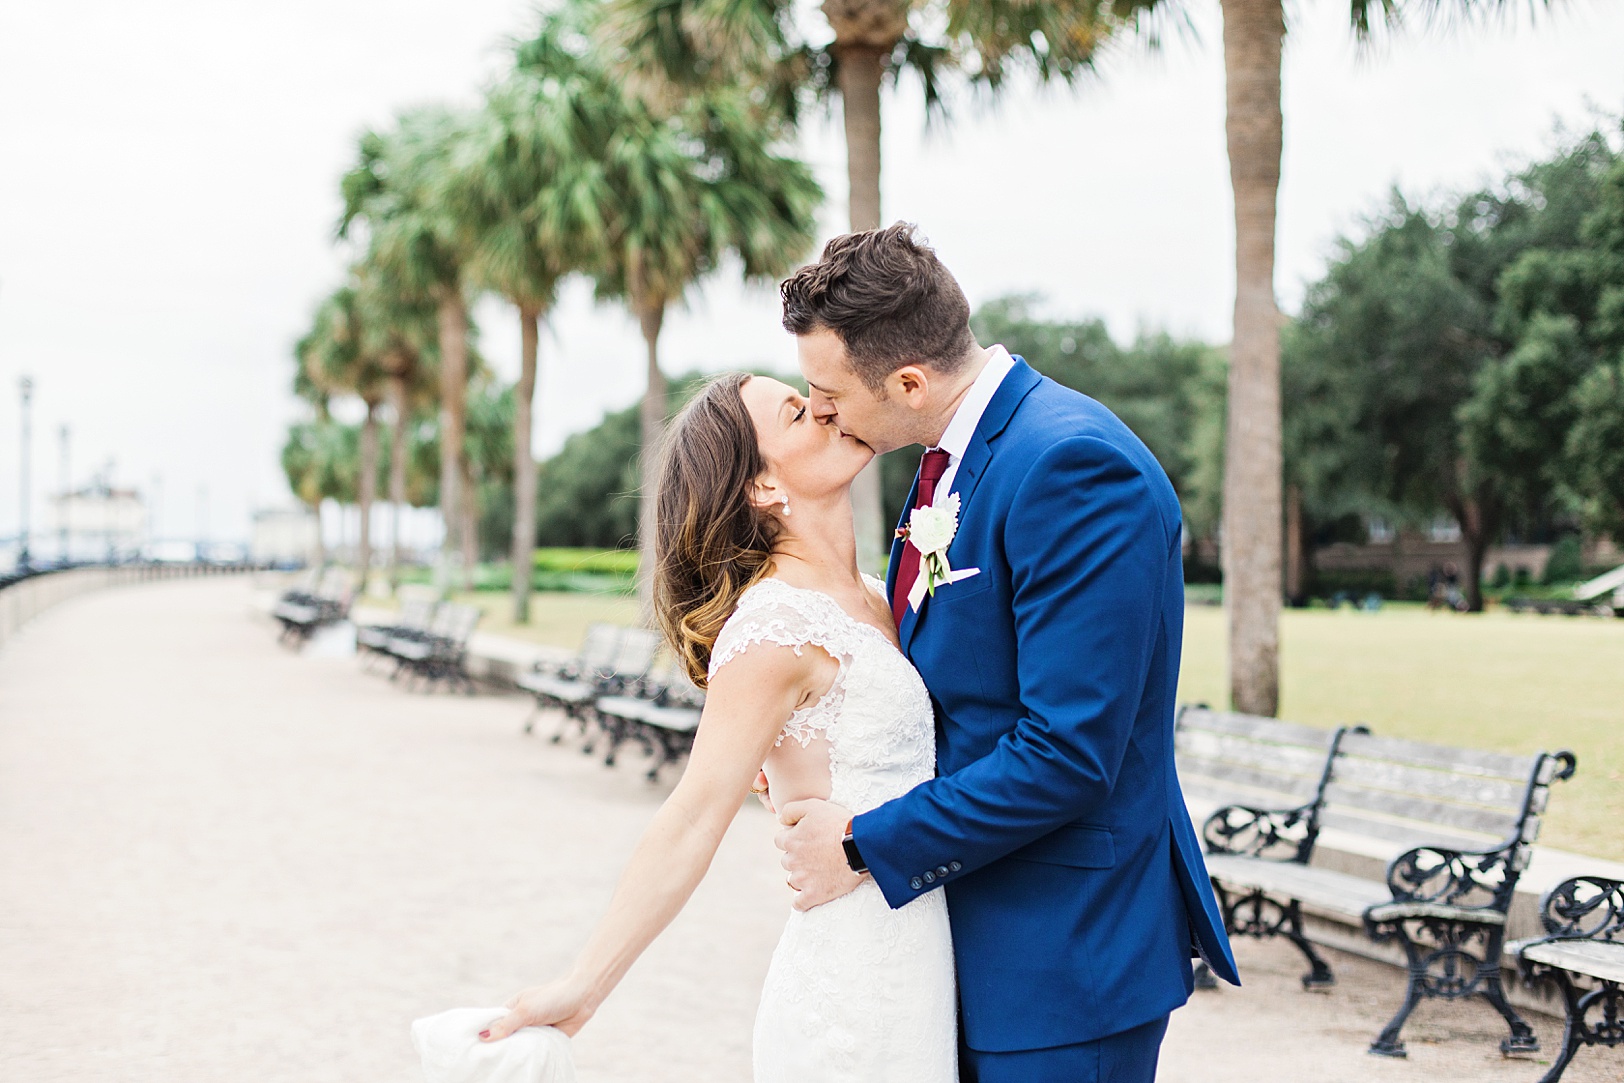 Romantic Kiss for Newlyweds | Charleston Wedding Photographer Kaitlin Scott 